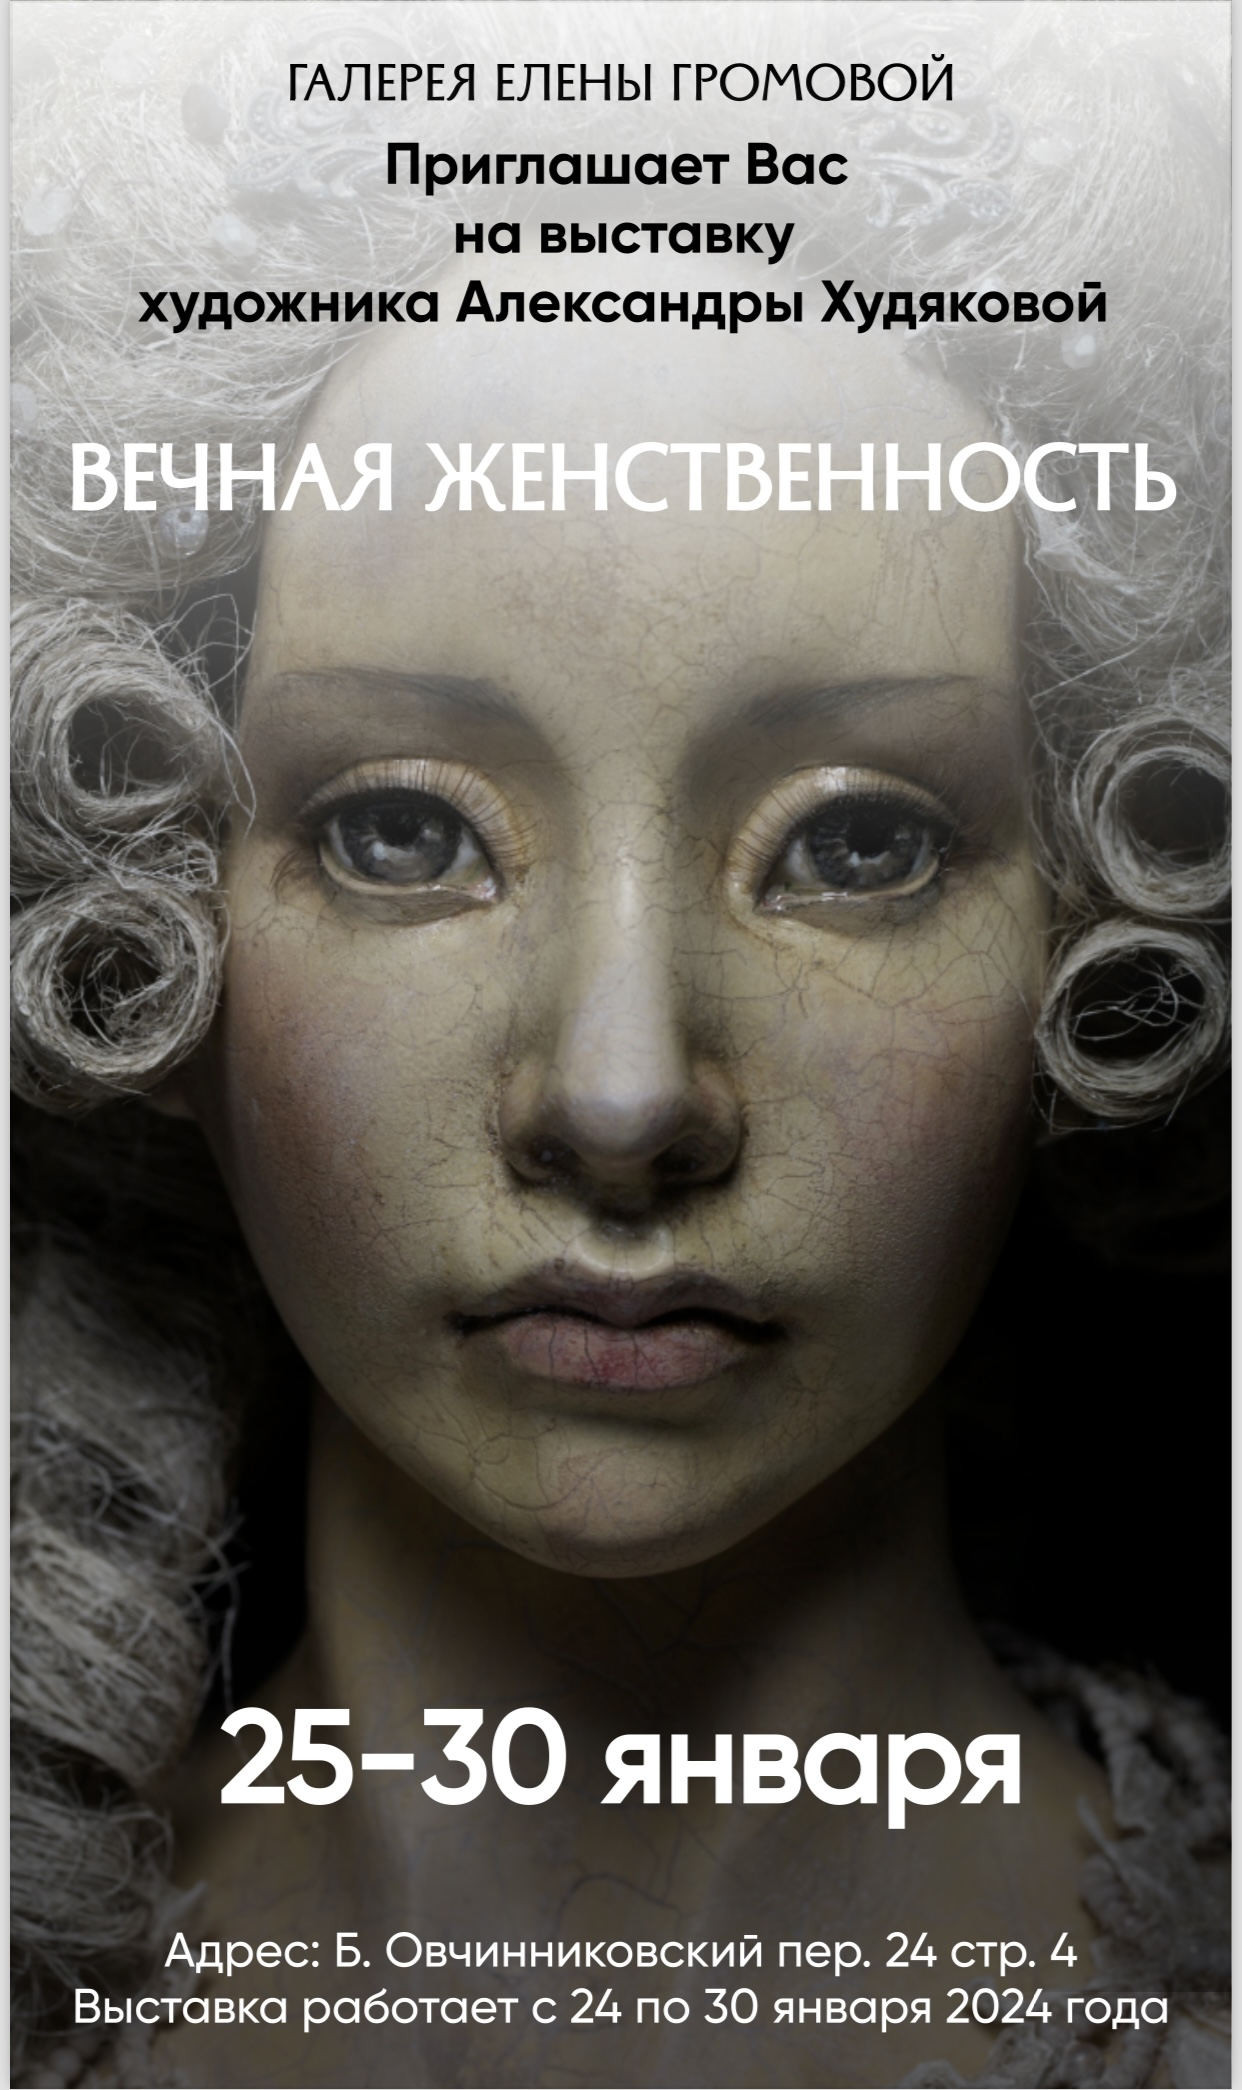 Personal exhibition of Alexandra Khudyakova